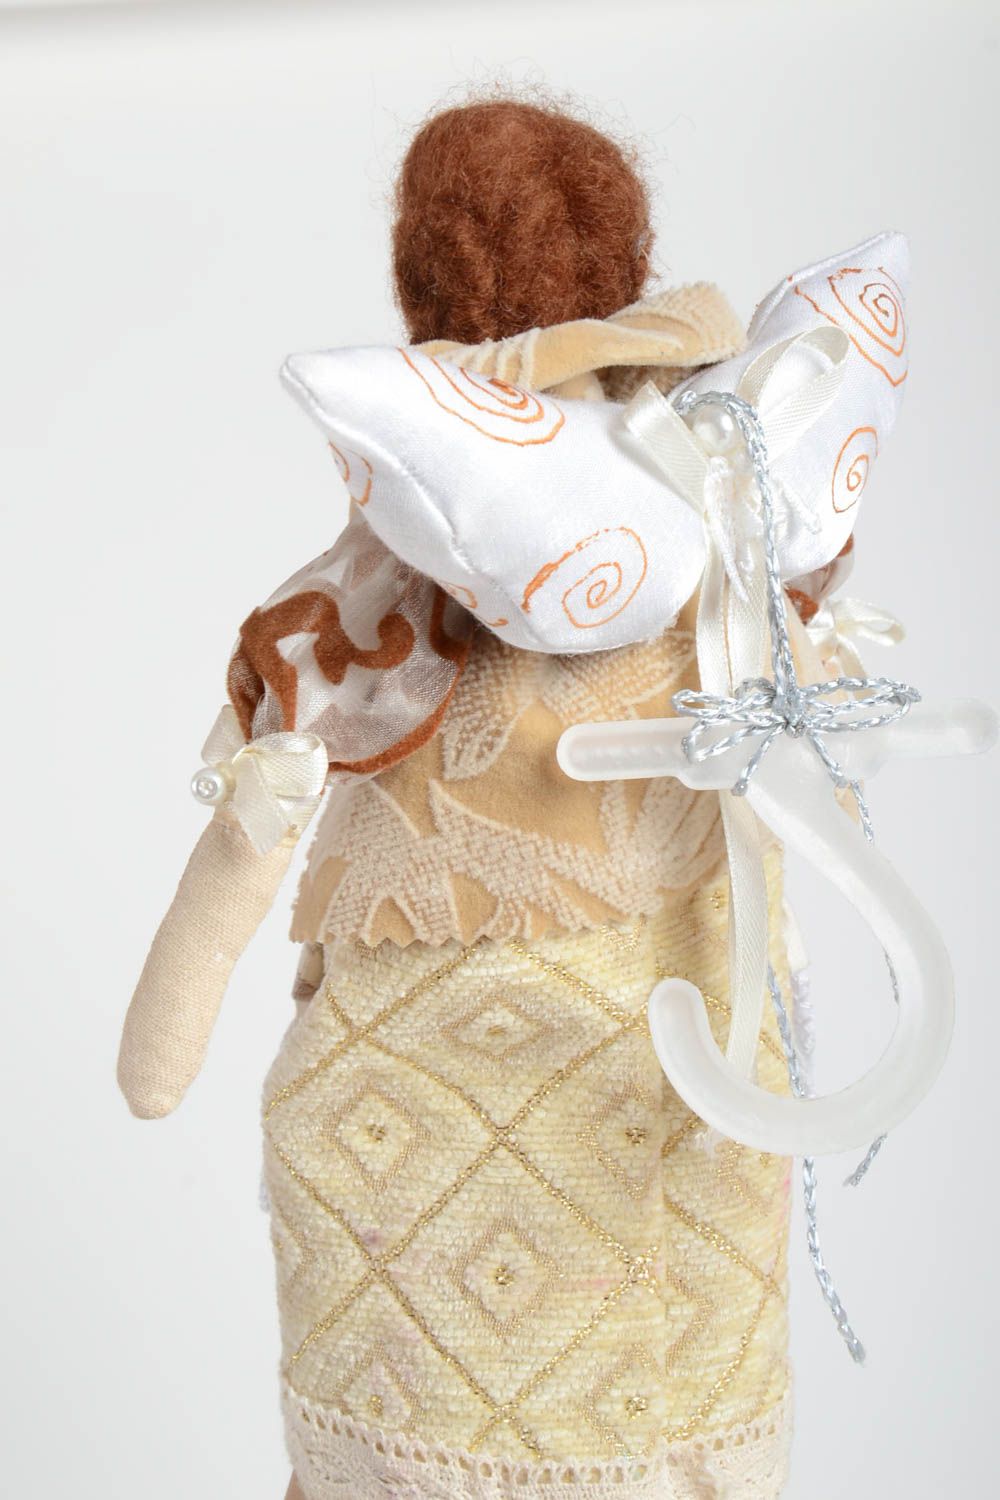 Handmade doll designer doll unusual toy decor ideas gift for girls toy decor photo 4